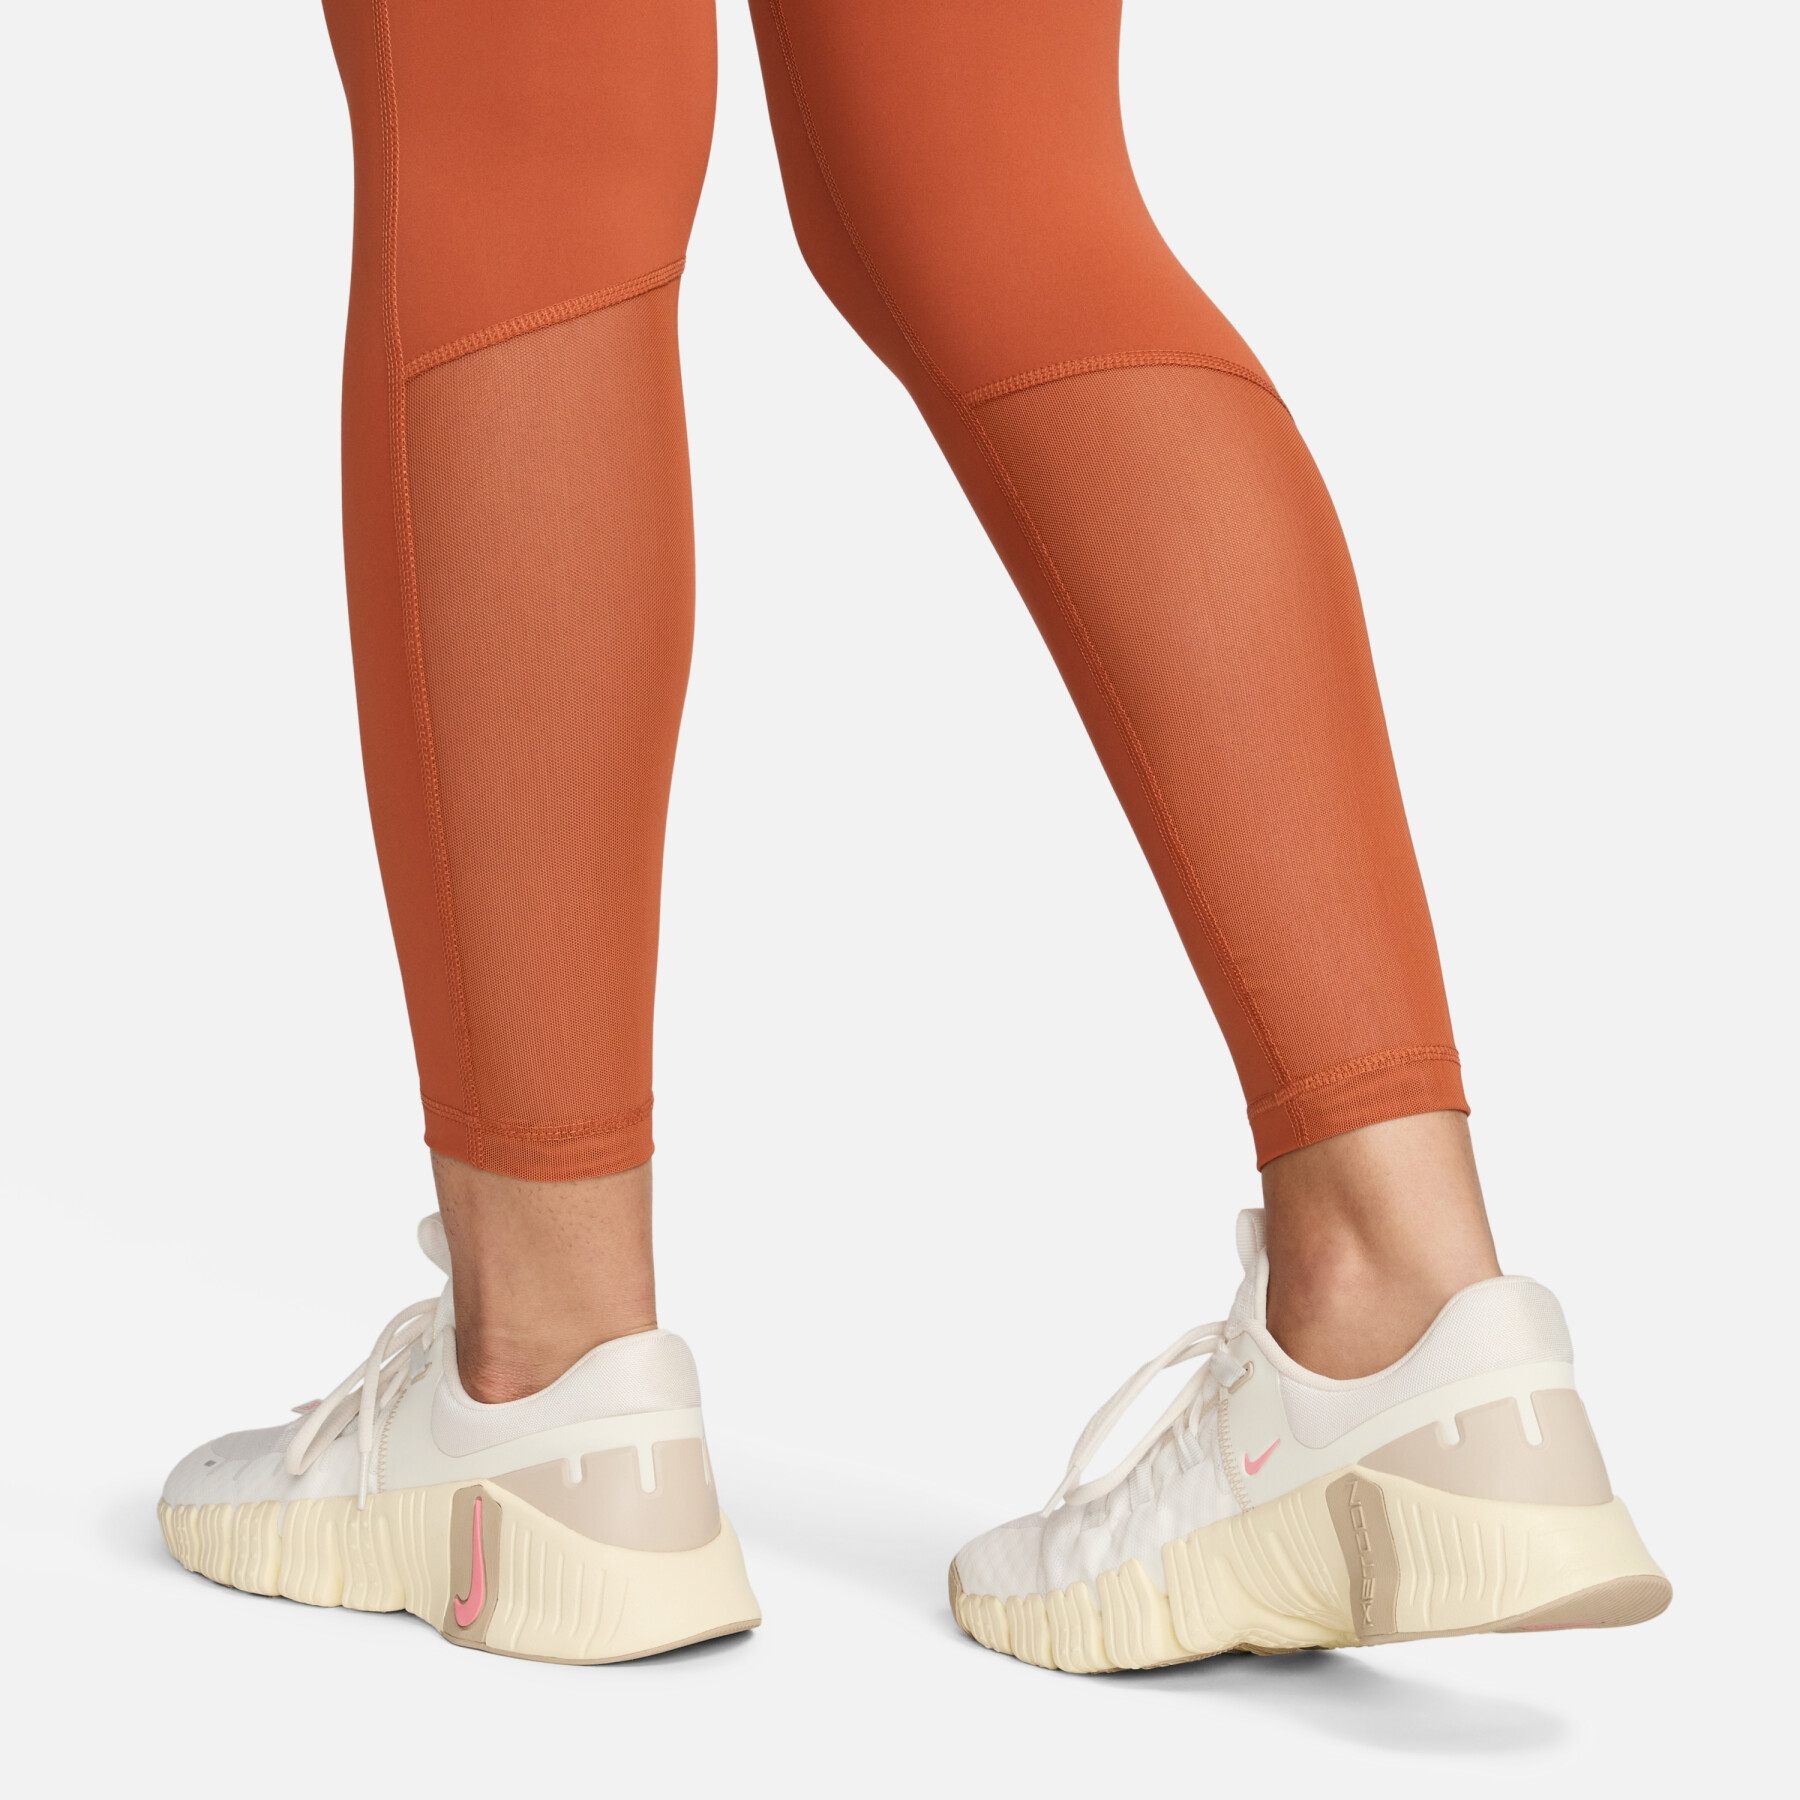 Leggings 7/8 Frau Nike Pro 365